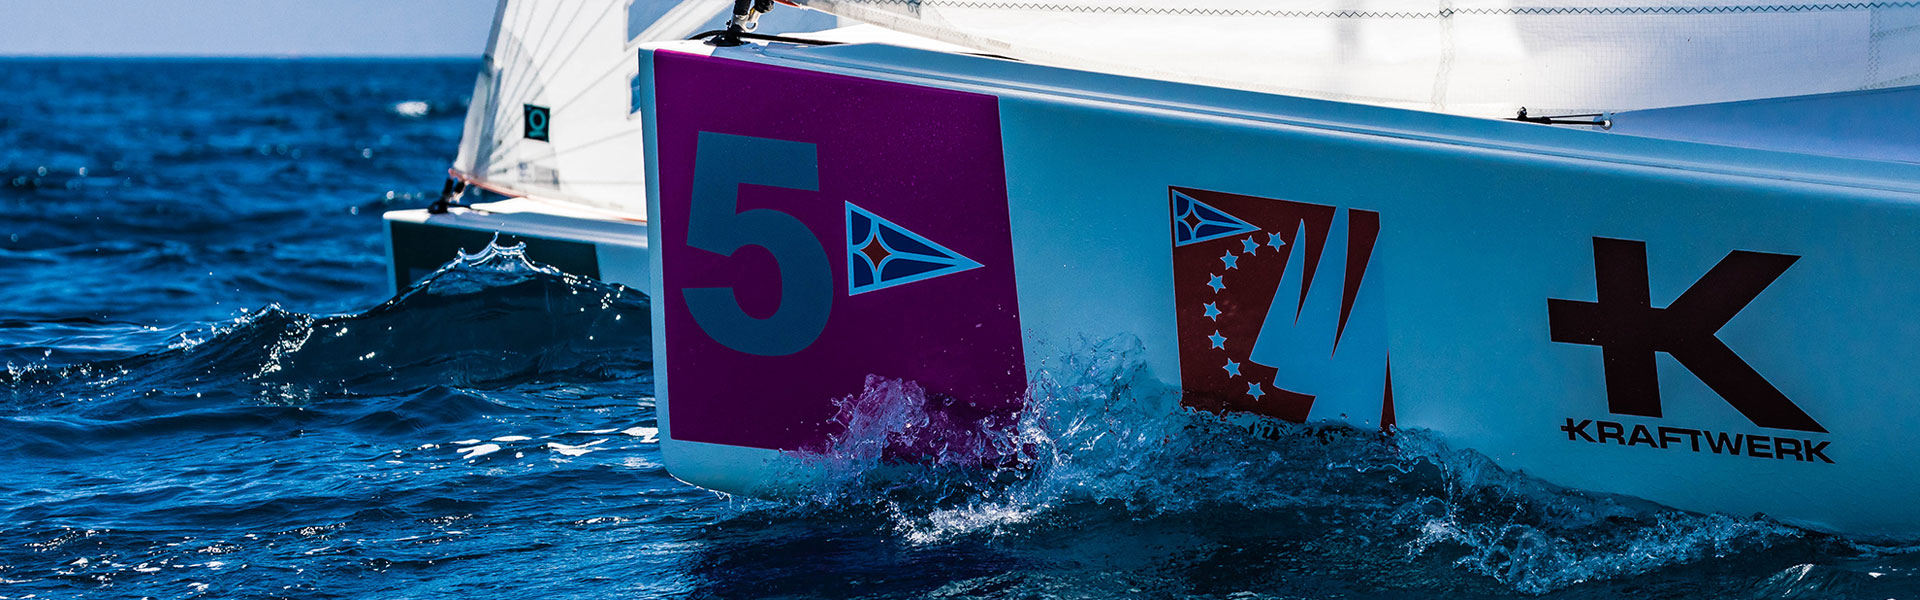 One Ocean Sailing Champions League  - Porto Cervo 2019